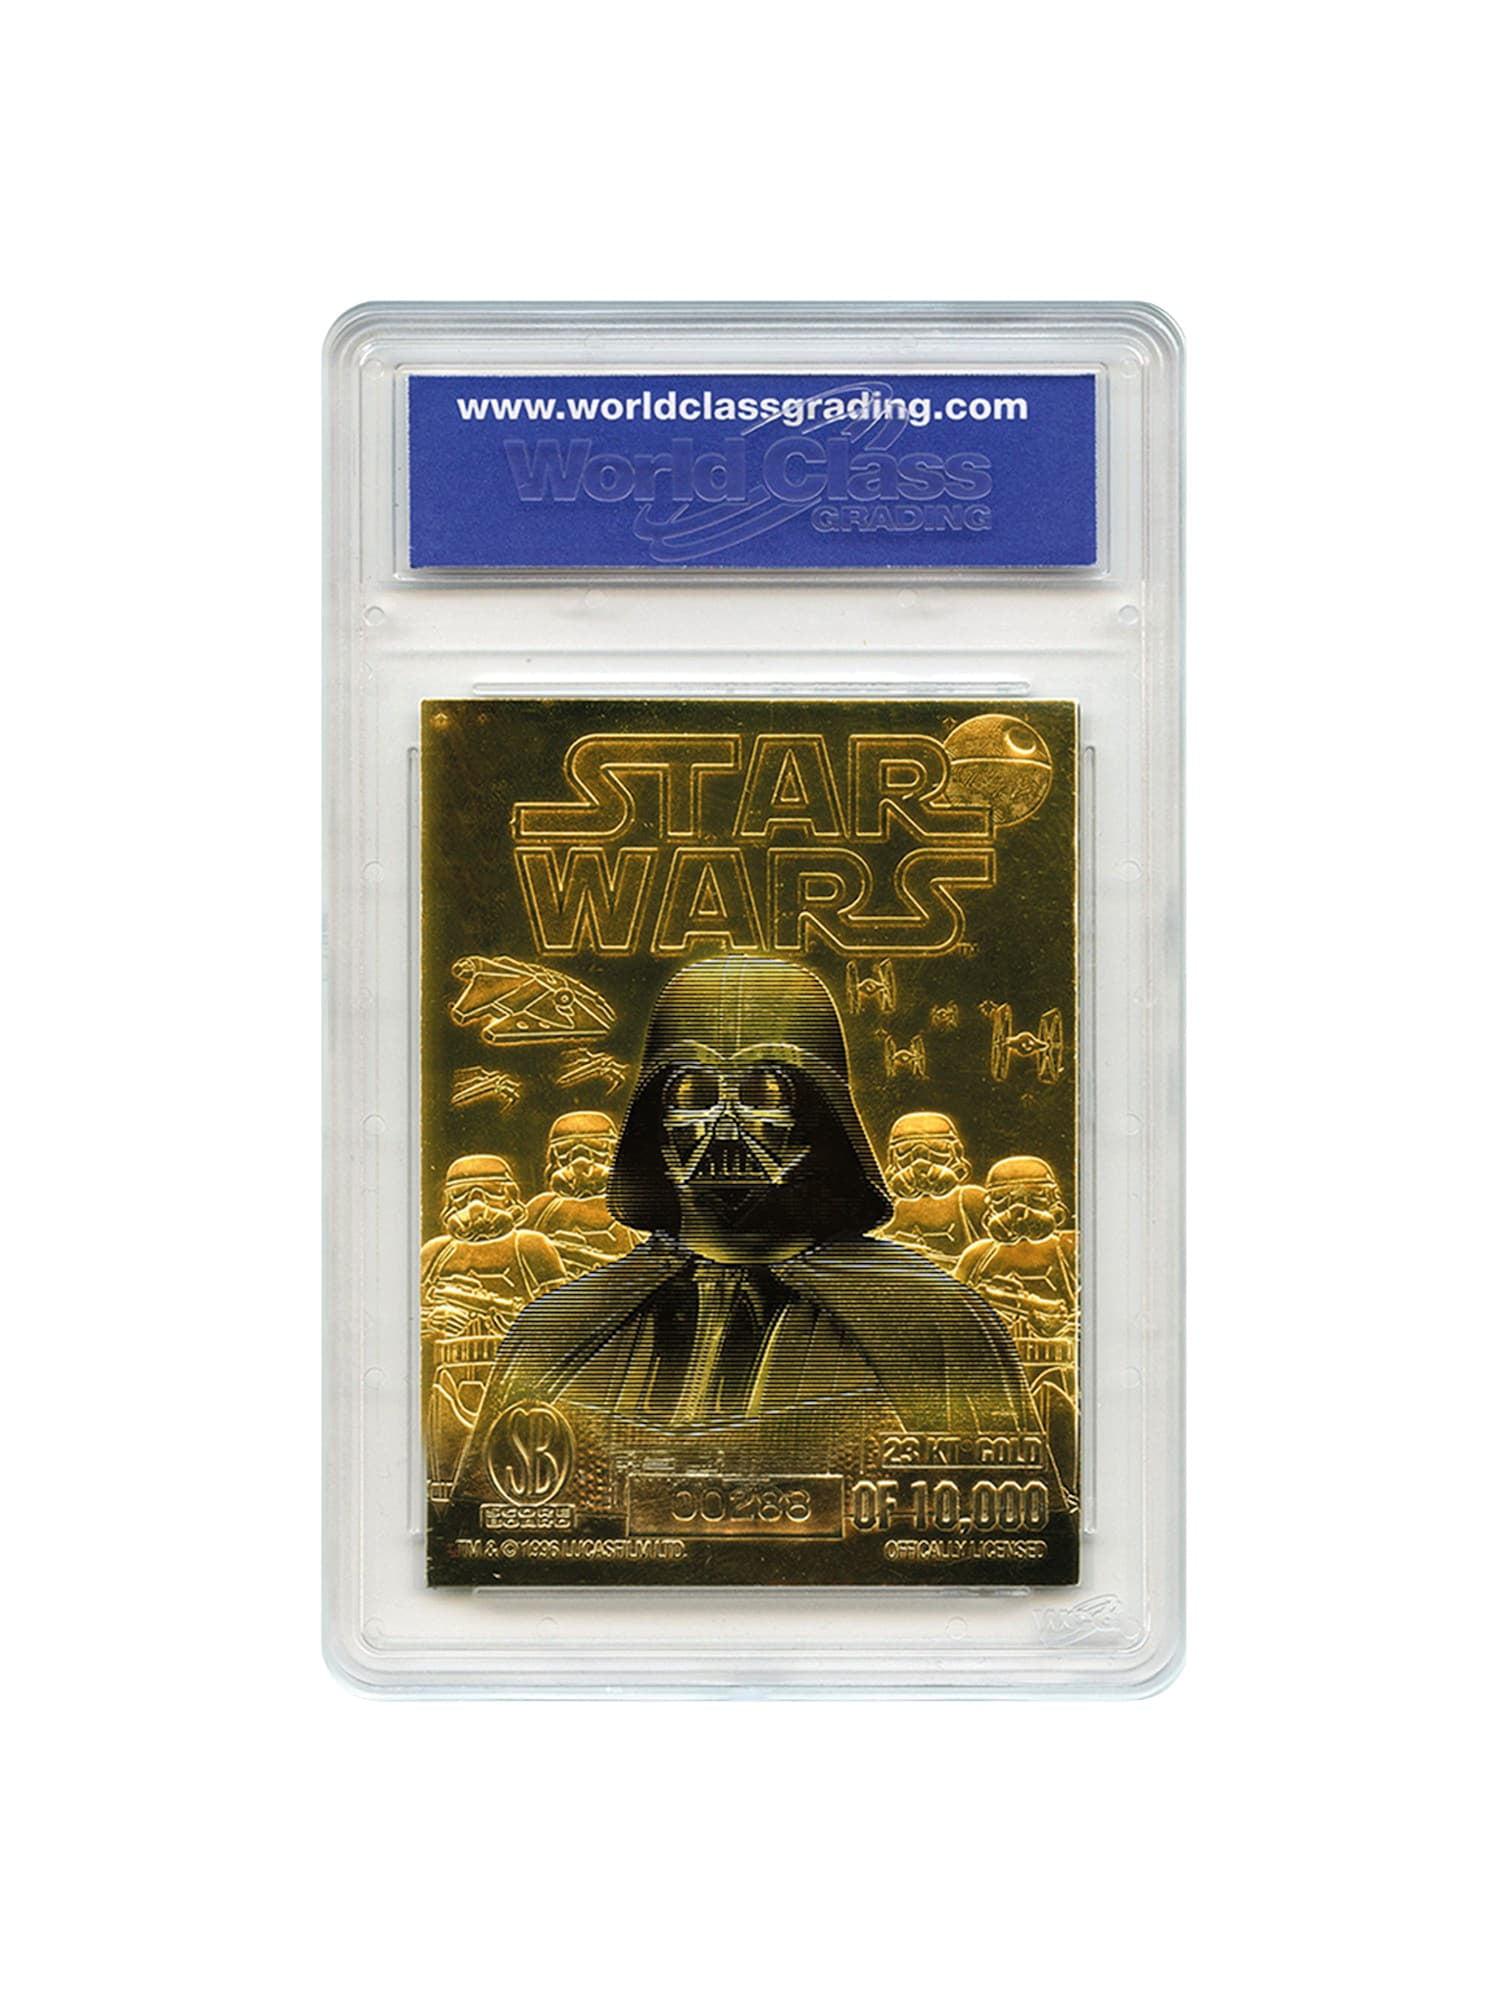 Graded GEM MINT 10 Star Wars DARTH VADER 23KT Gold Card Sculptured #/10,000 